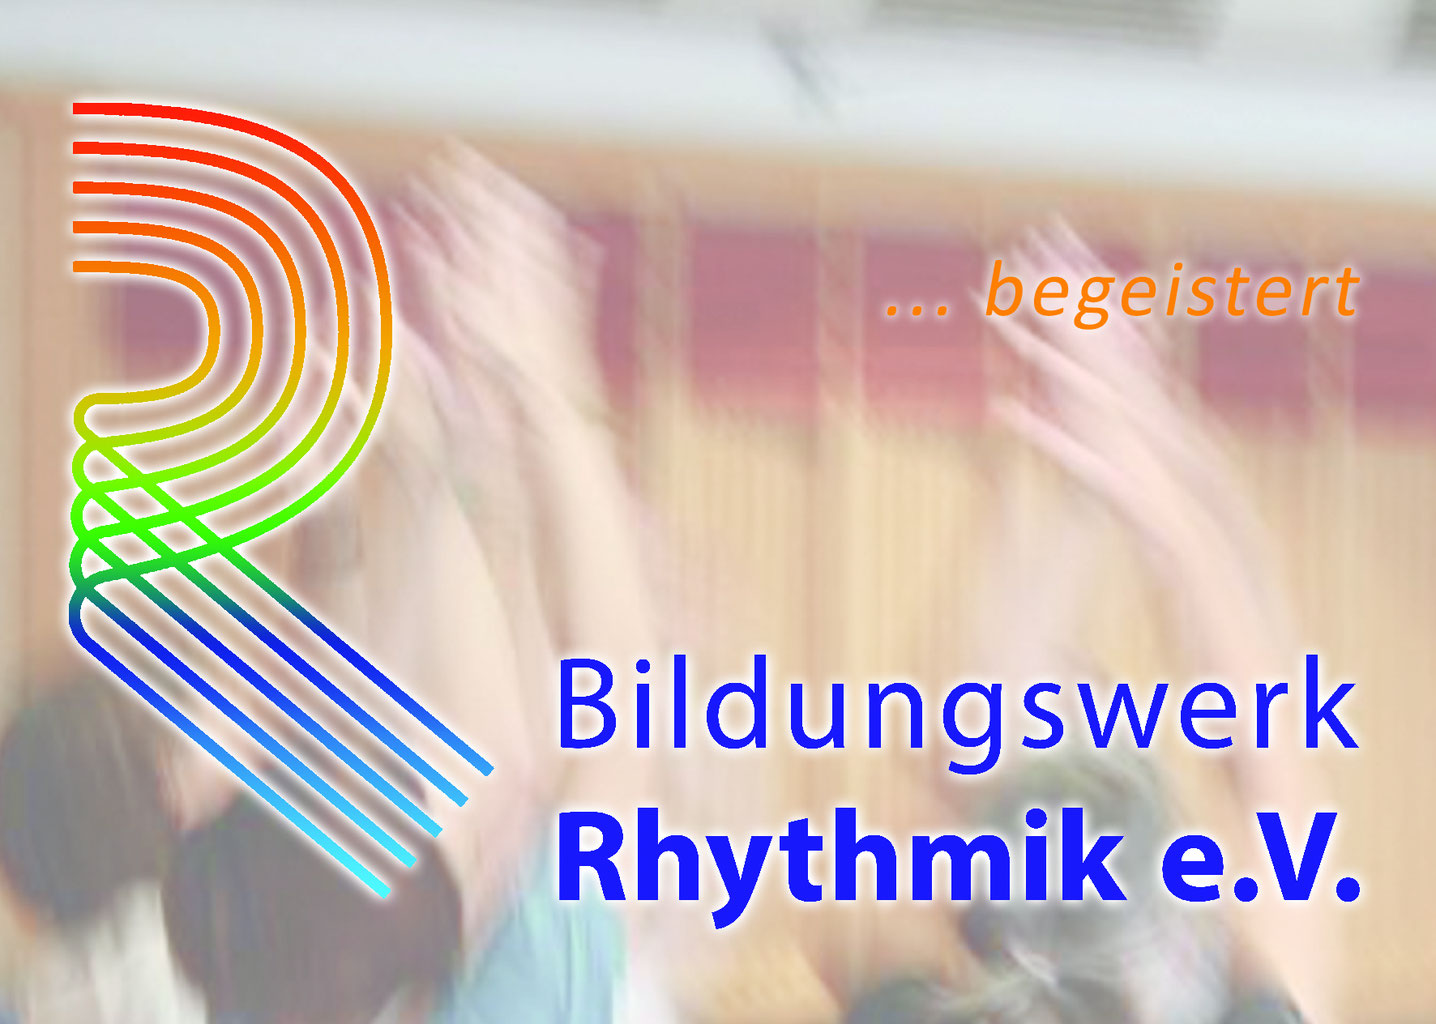 (c) Bw-rhythmik.de